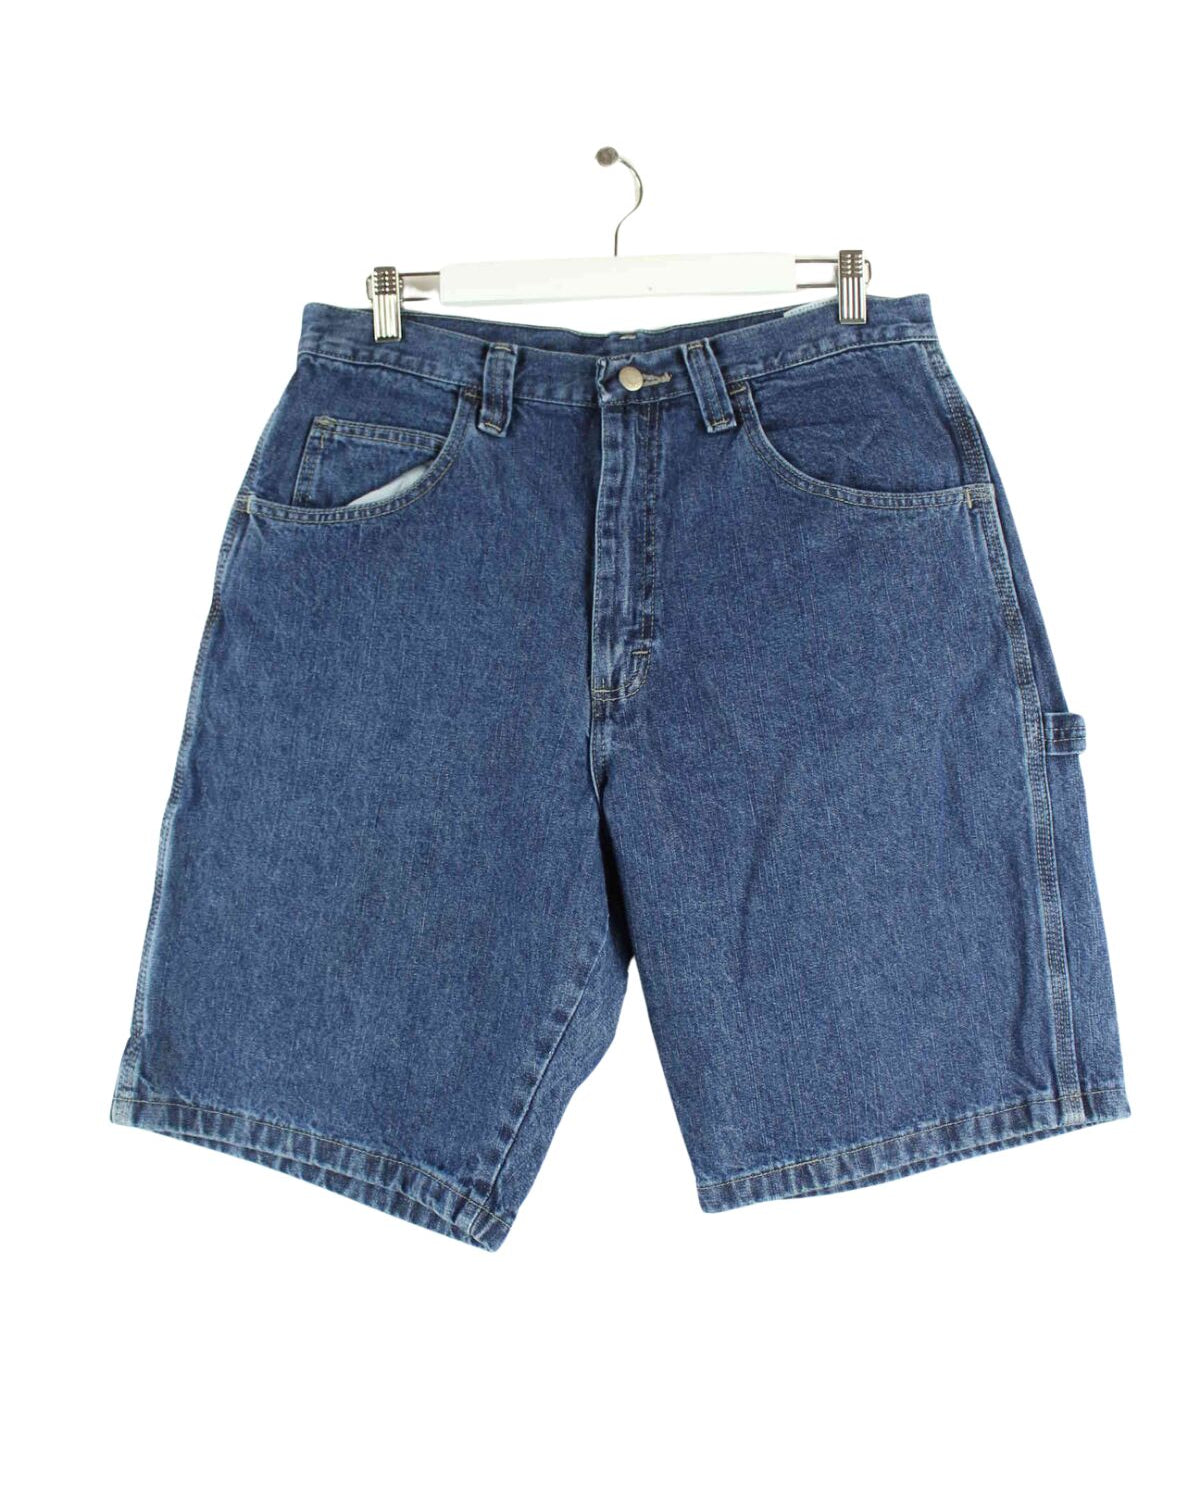 Wrangler Carpenter Jorts / Jeans Shorts Blau W32 (front image)